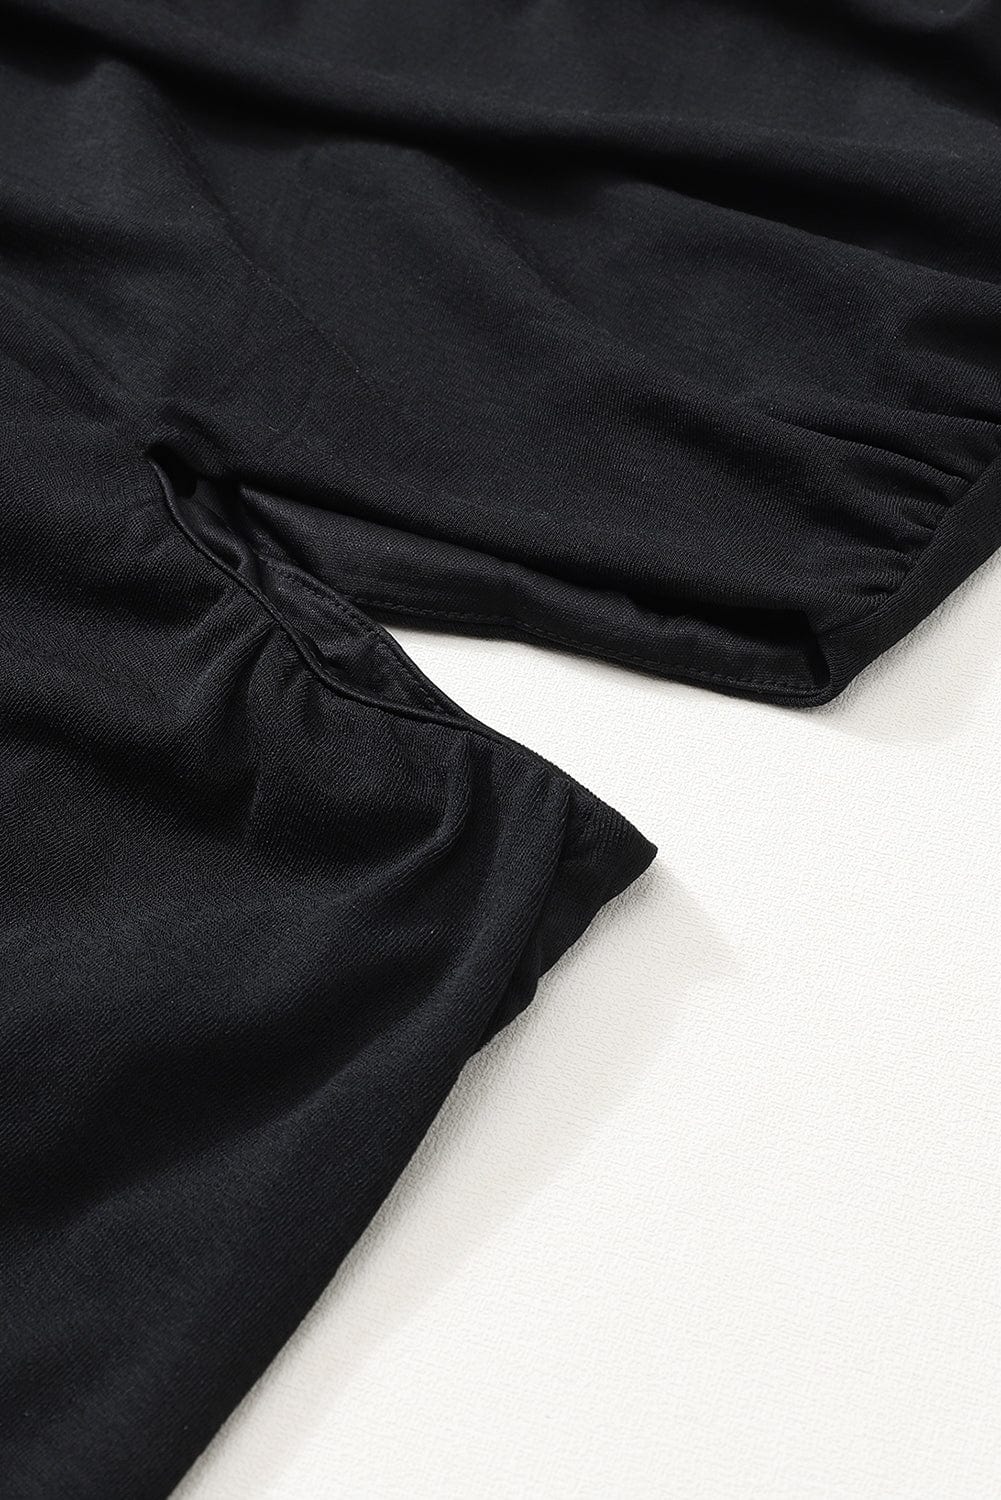 Shoppe EZR Dresses Black  Asymmetric One Shoulder Cutout Bodycon Dress